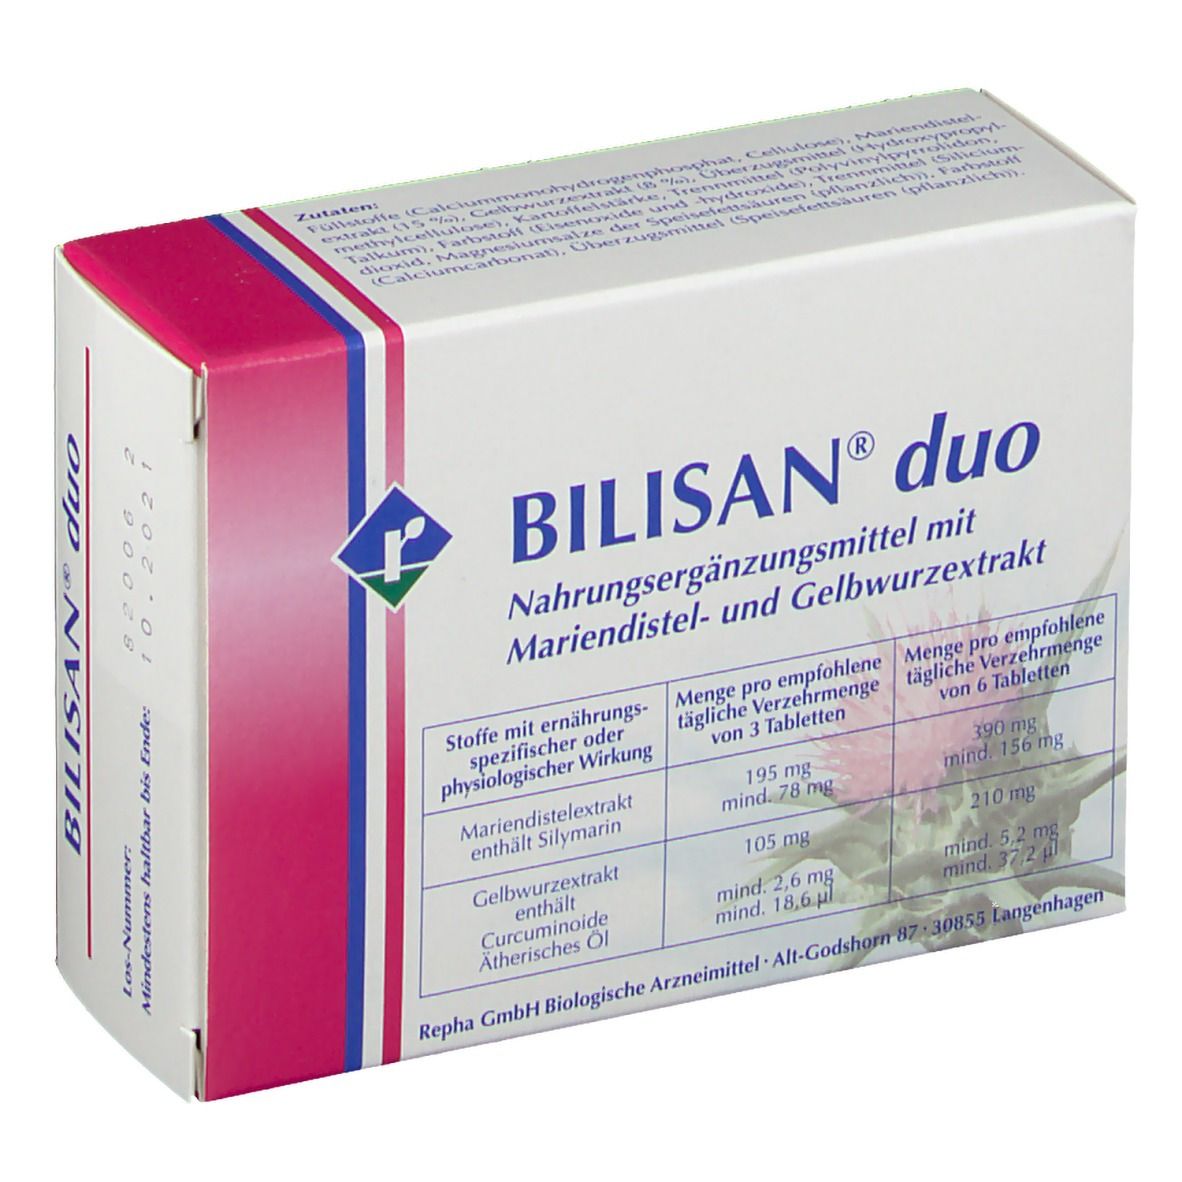 BILISAN® duo